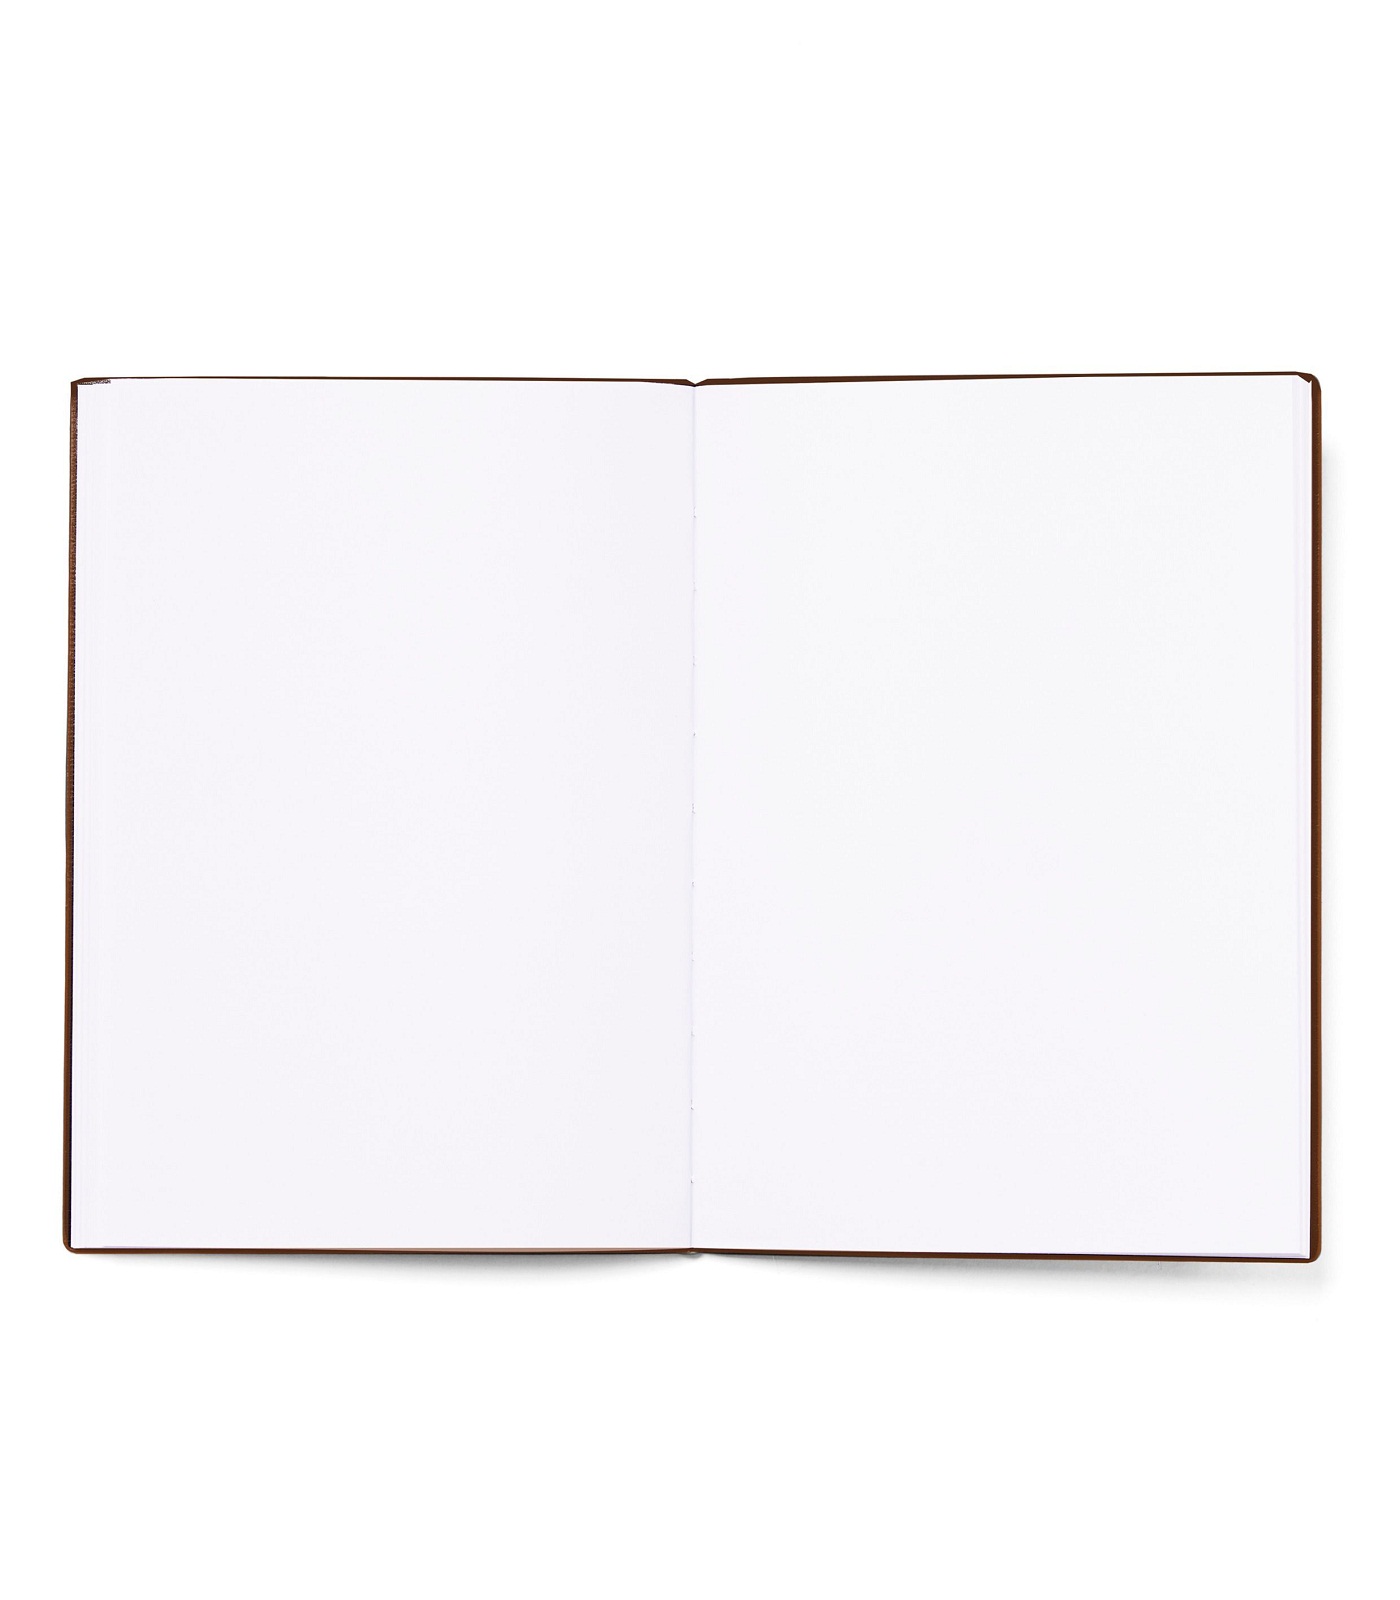 HUGO BOSS Notebook A5 Iconic Camel Plain